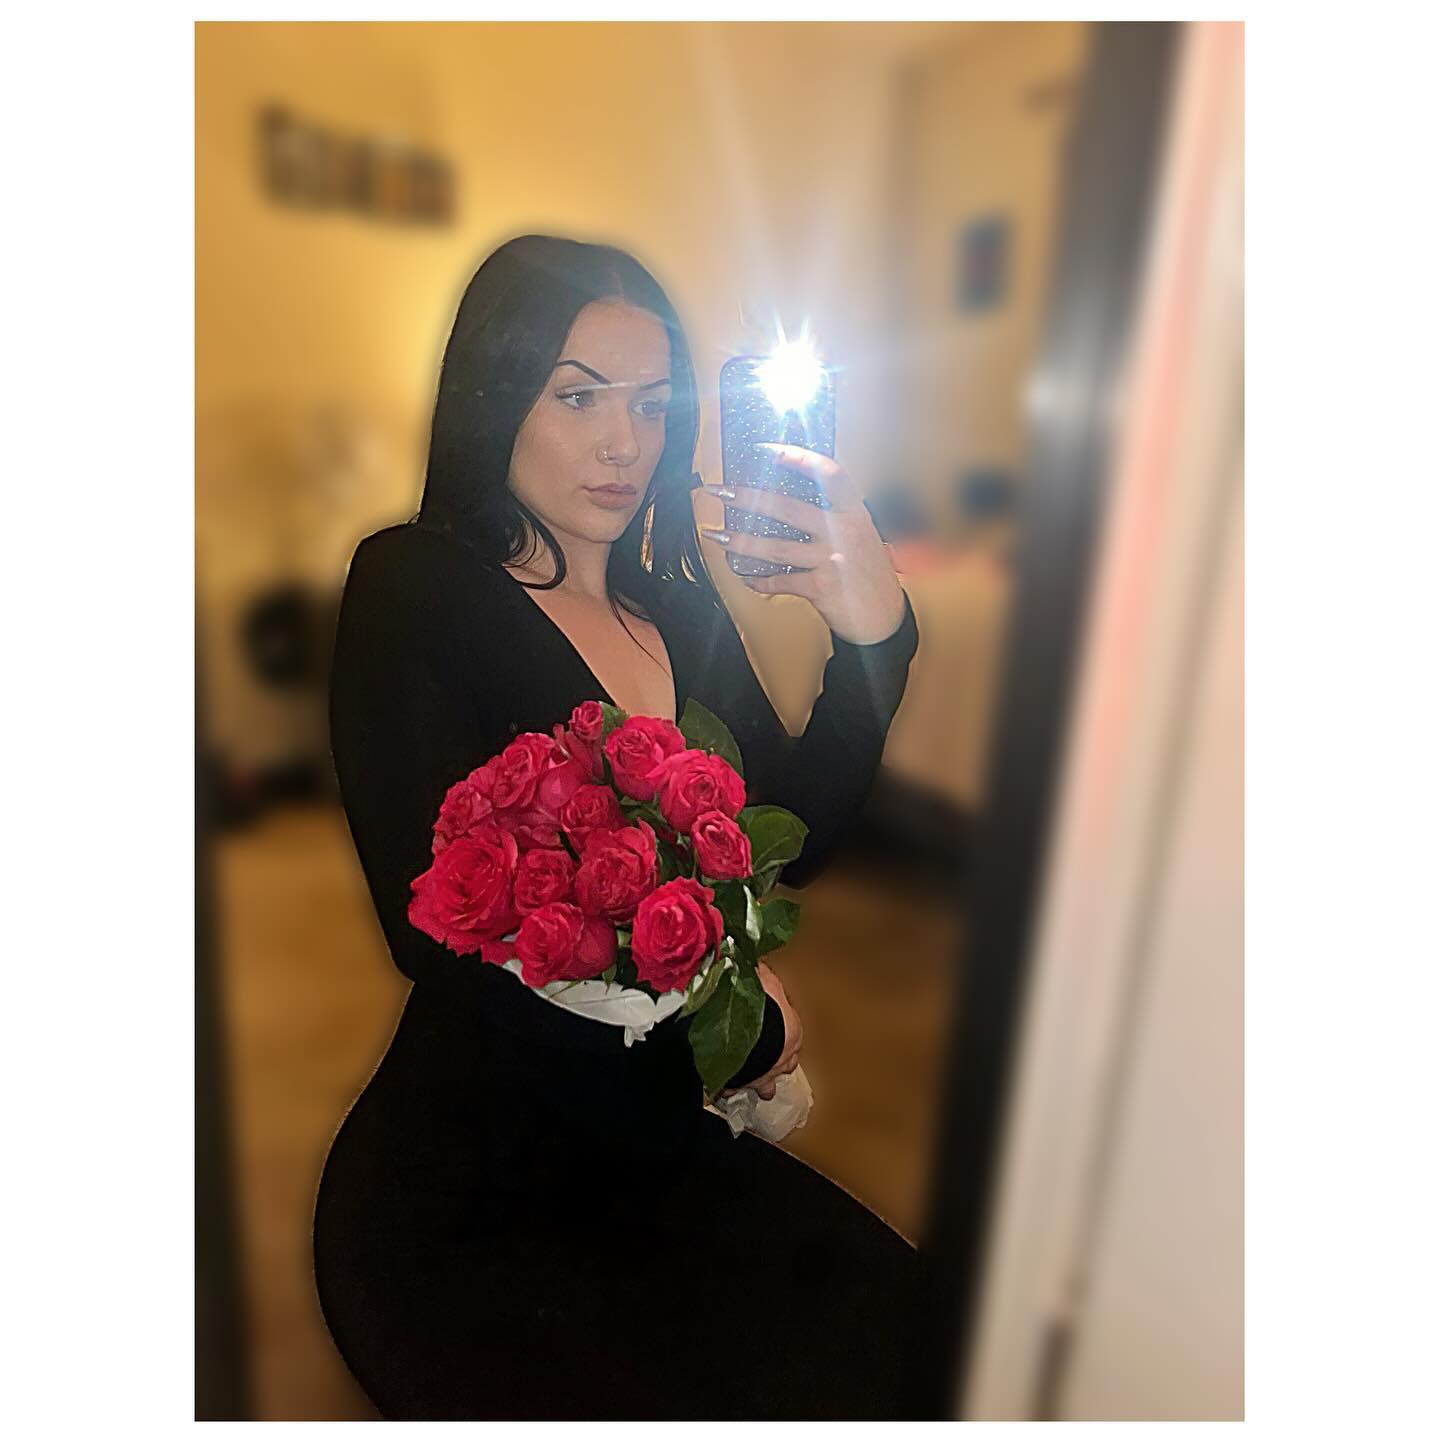 Sweet like a rose, Sharp like a thorn.🥀
•
•
•
•
•
•
#fyp #explorepage #recent4recent #2024 #selfie #selflove #roses #blackdress #blueeyes #explore #fypシ #january #pinkroses🌹 #flowers #instalike #fypage